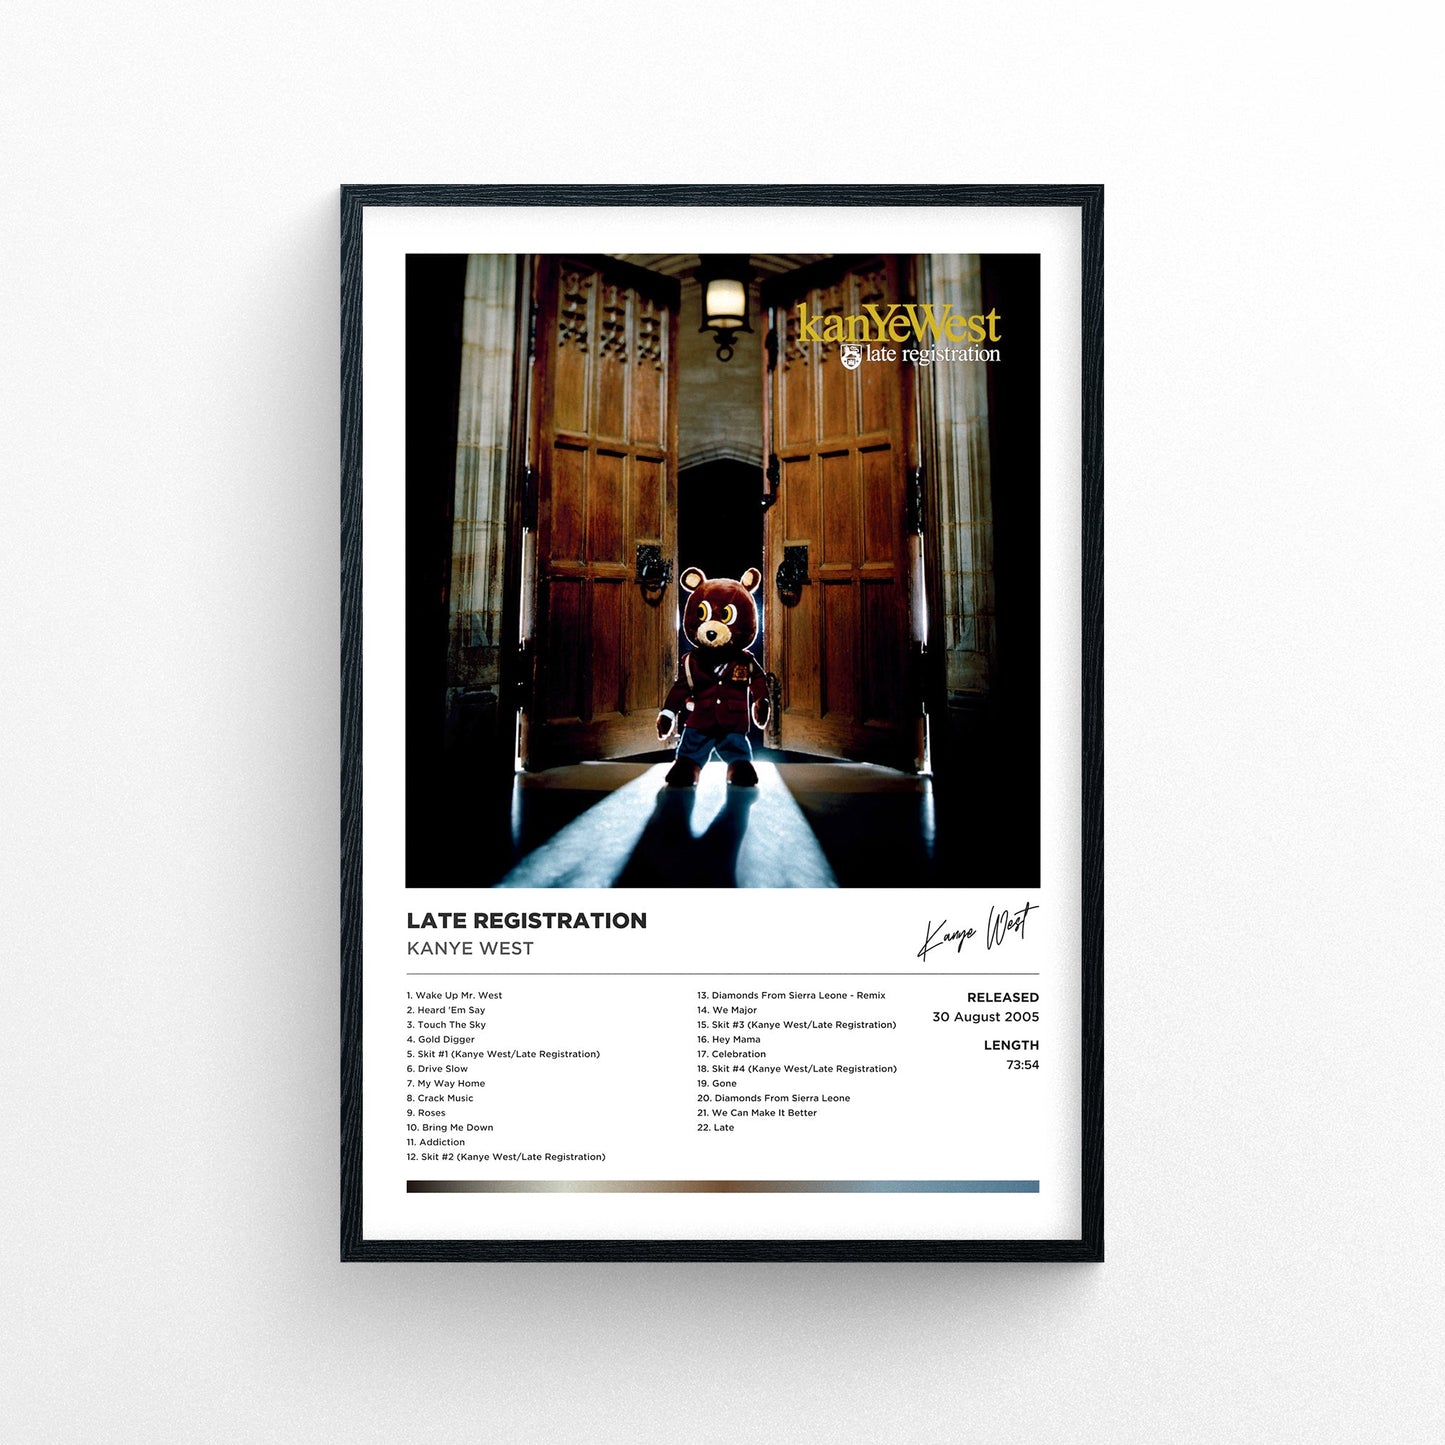 Kanye West - Late Registration Framed Poster Print | Polaroid Style | Album Cover Artwork